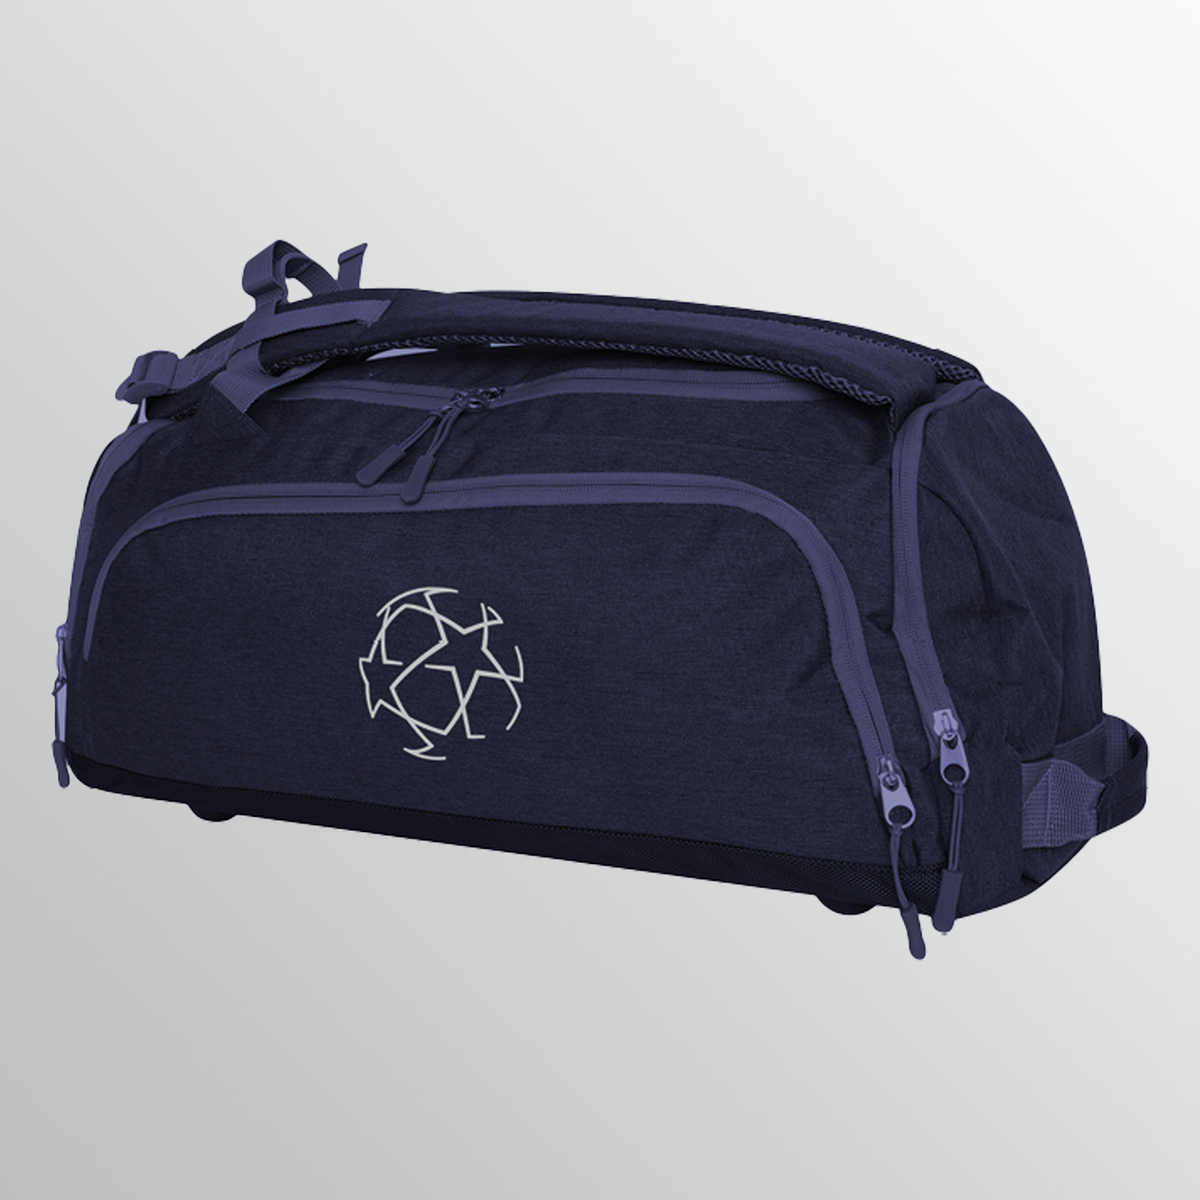 UEFA Champions League Premium Eco Tech 2 en 1 Bag - Backpack &amp; Holdall